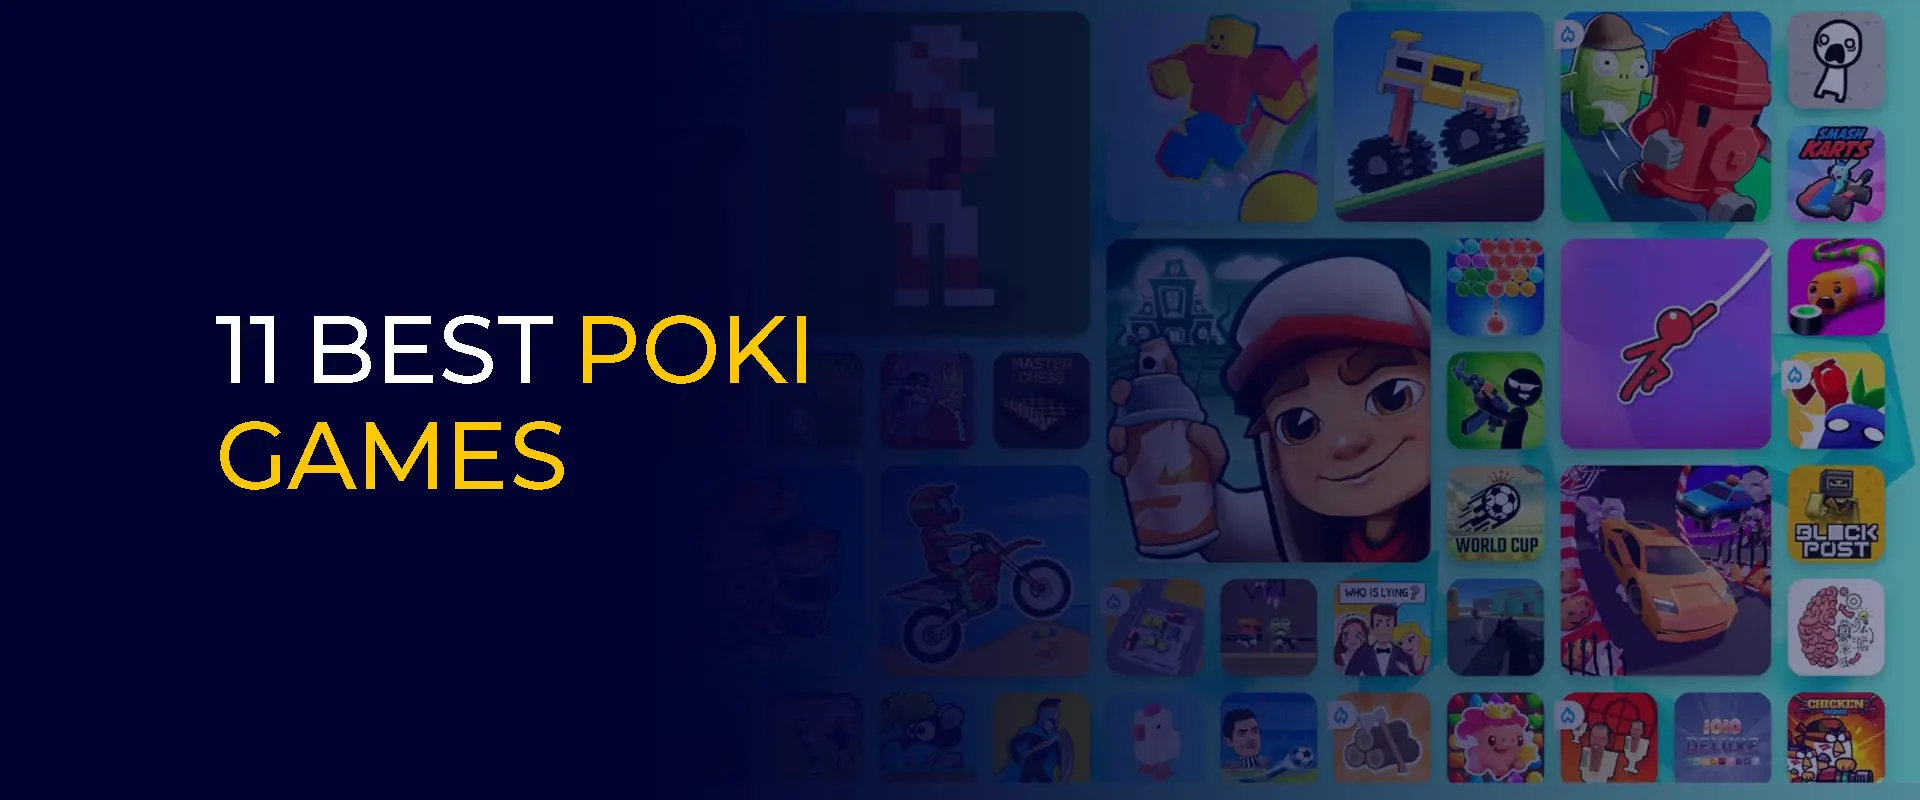 11 Best Poki Games